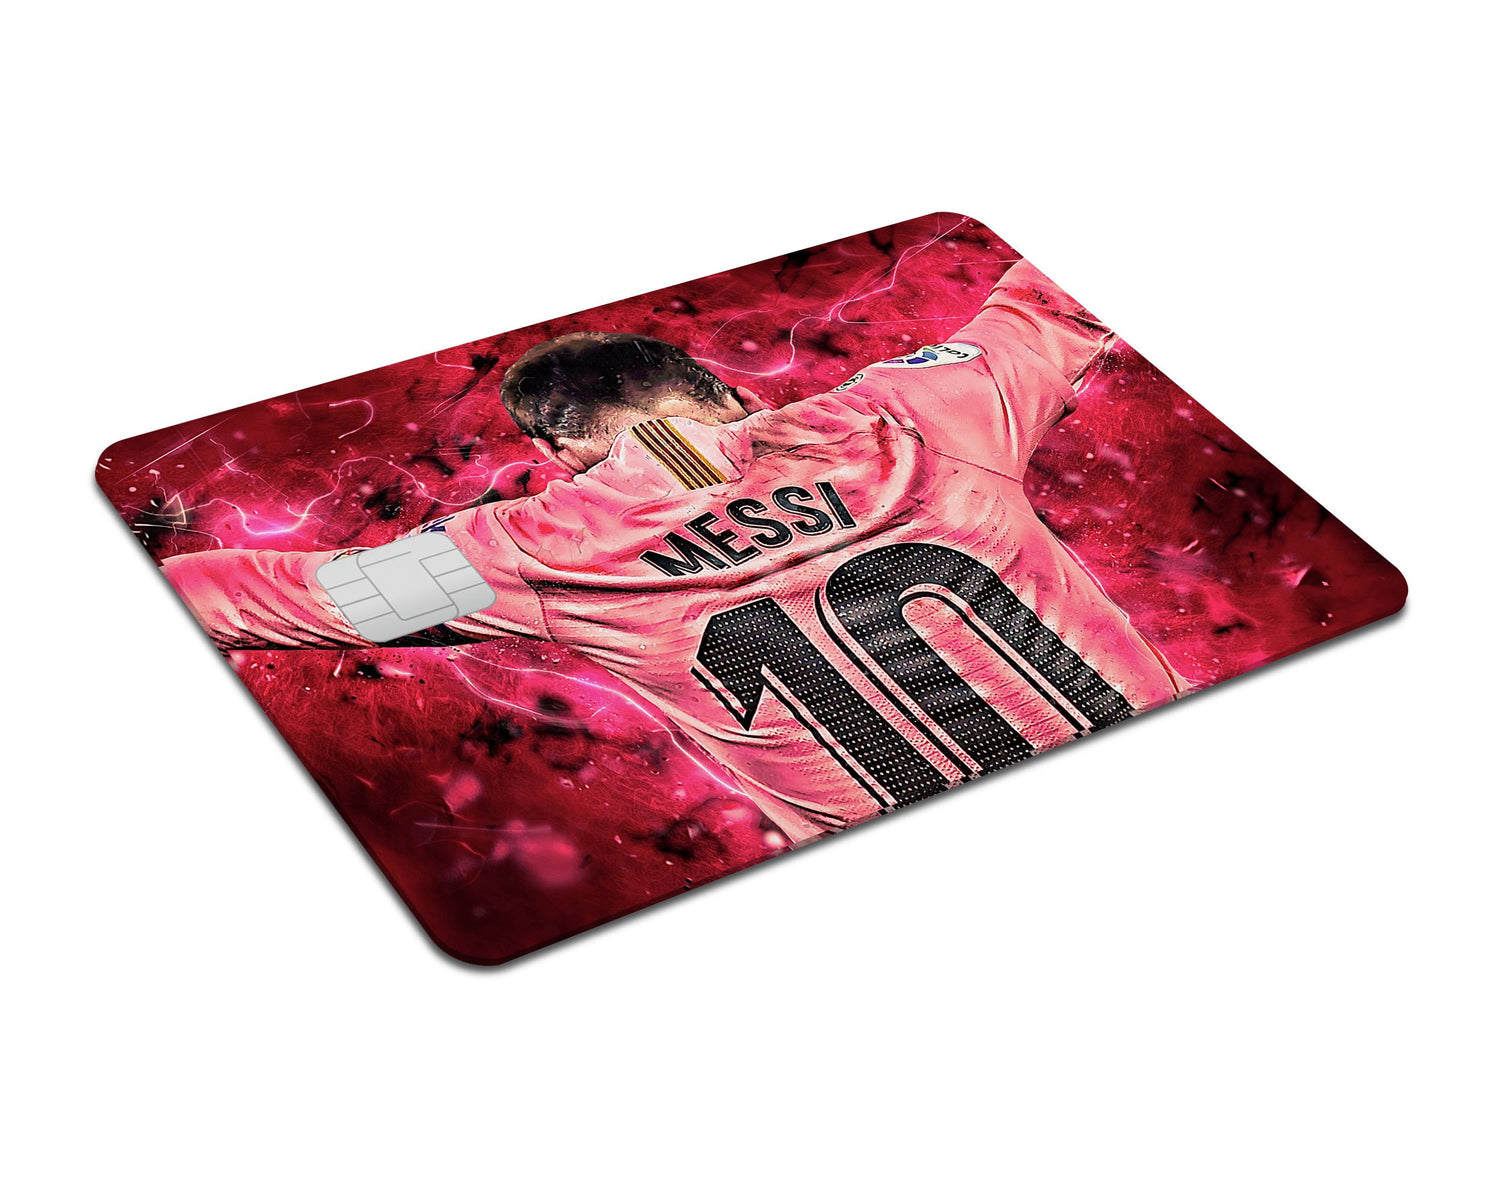 Flex Designs Credit Card Messi #10 Full Skins - Sports Soccer & Debit Card Skin